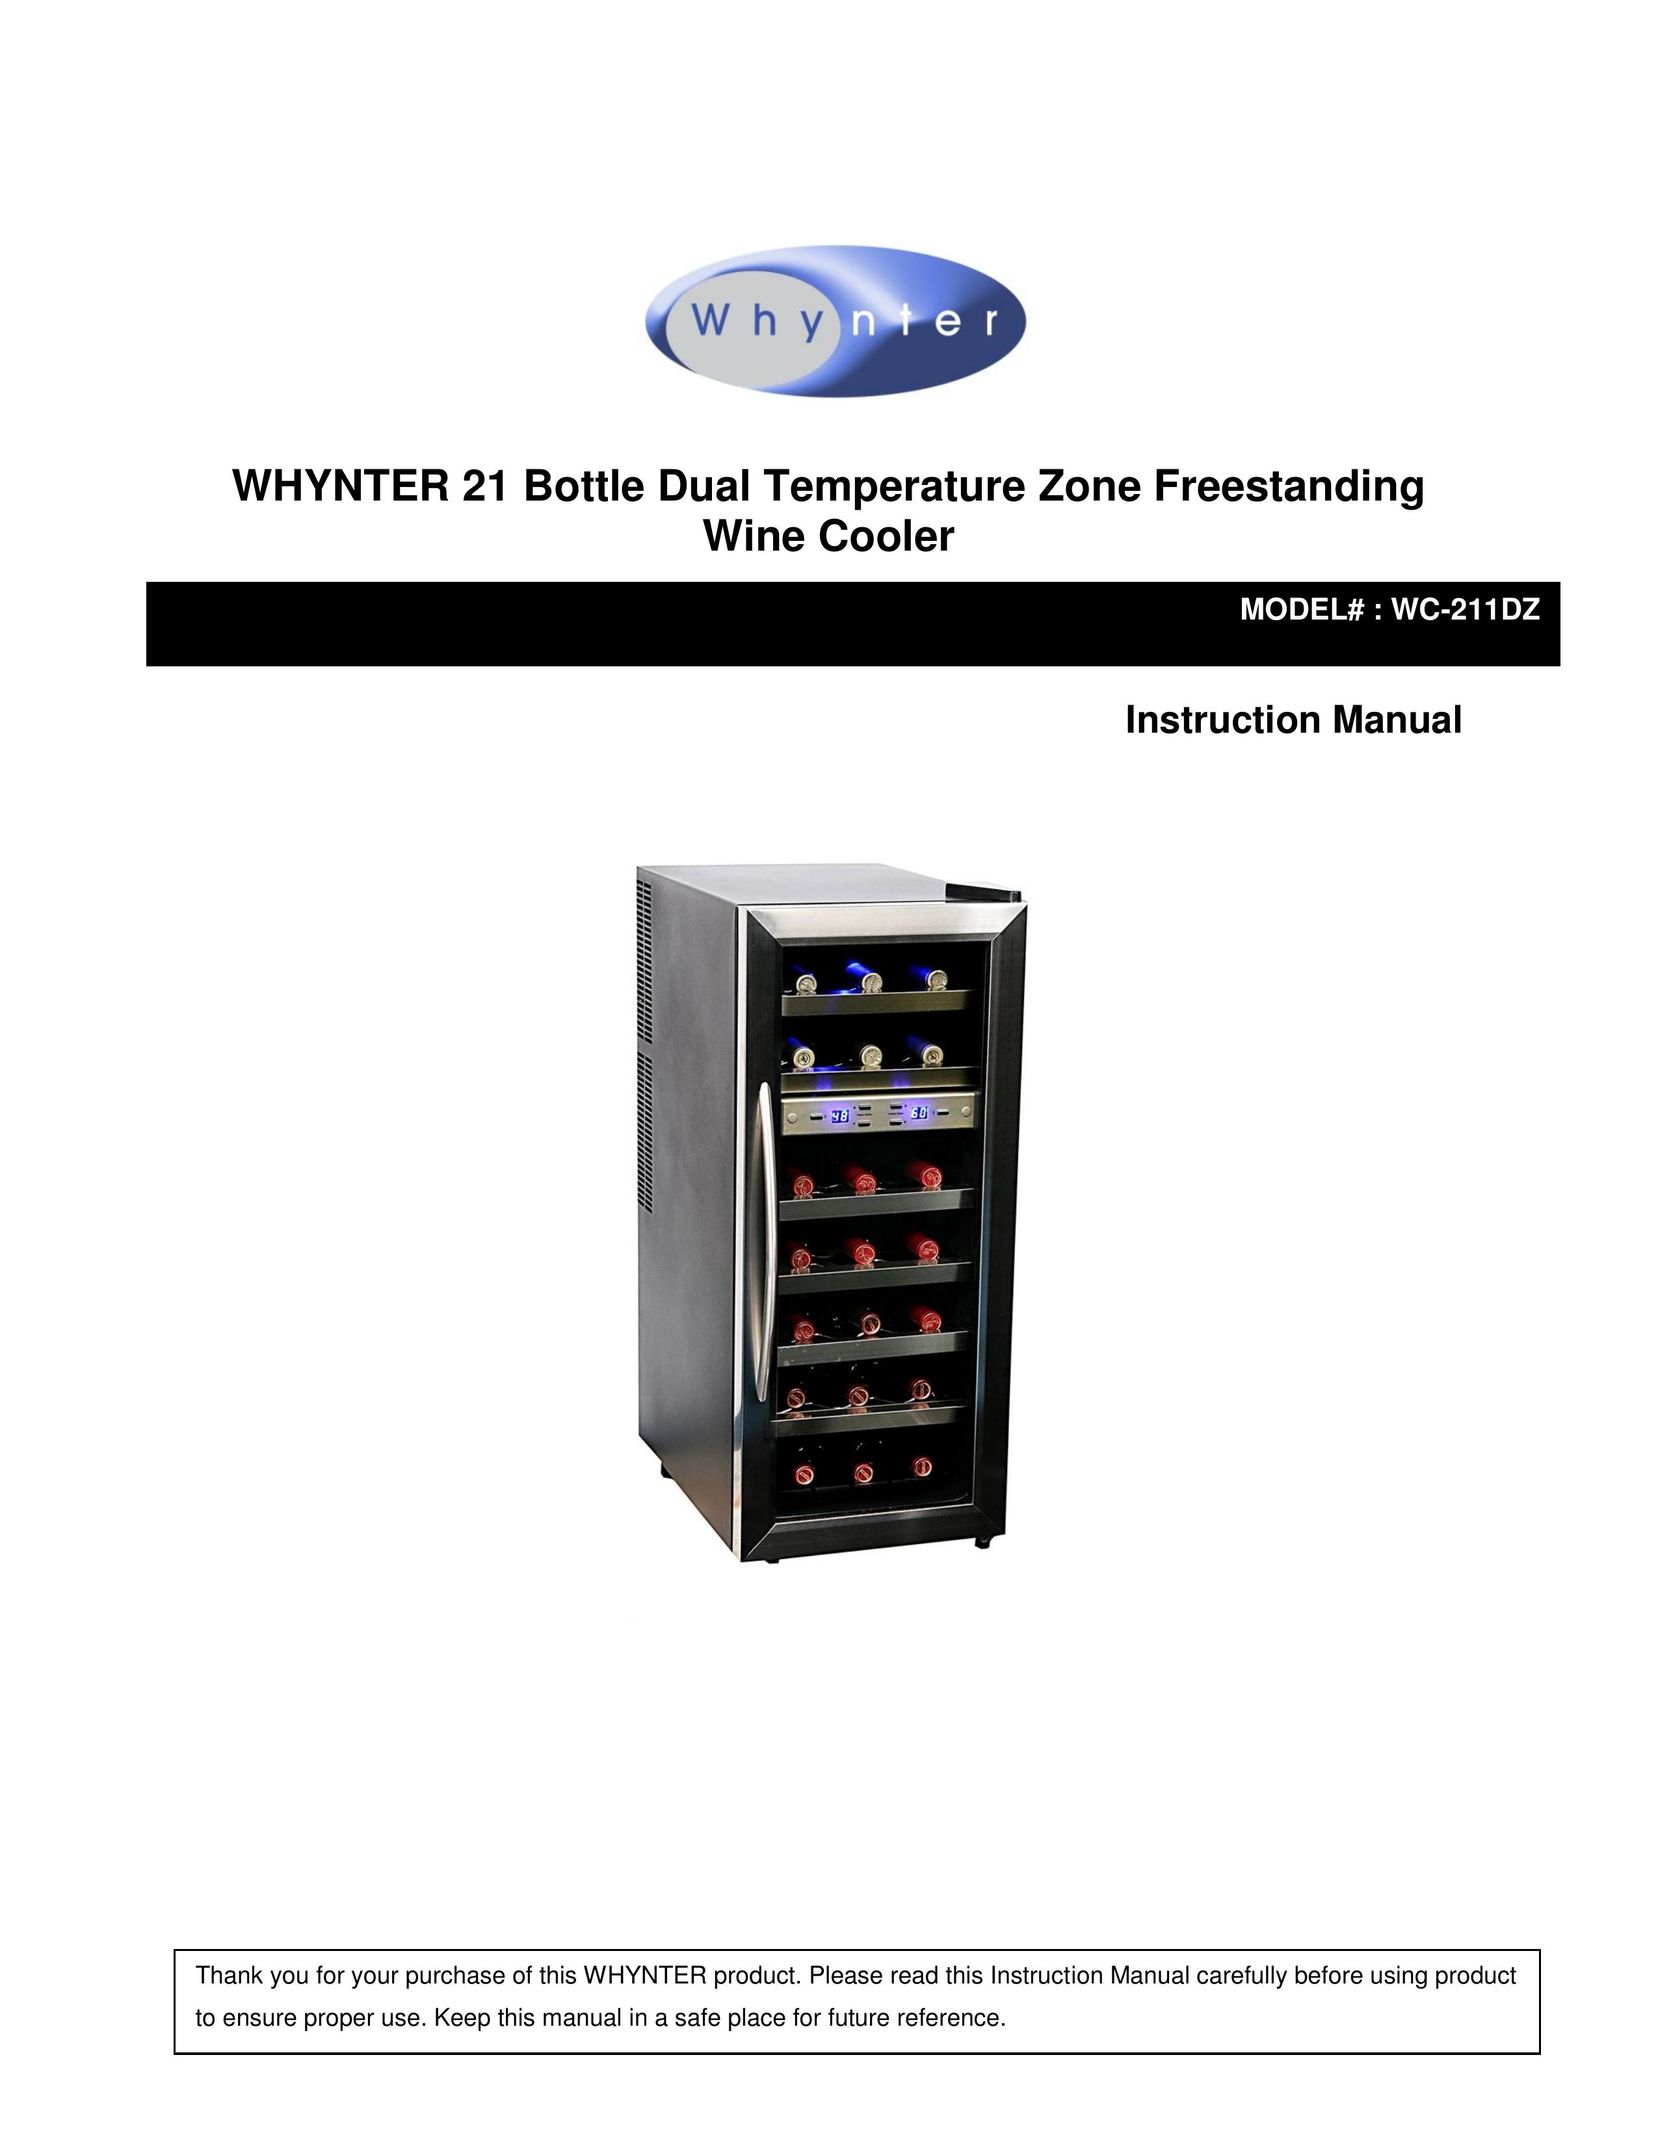 Whynter WZ-211DZ Beverage Dispenser User Manual